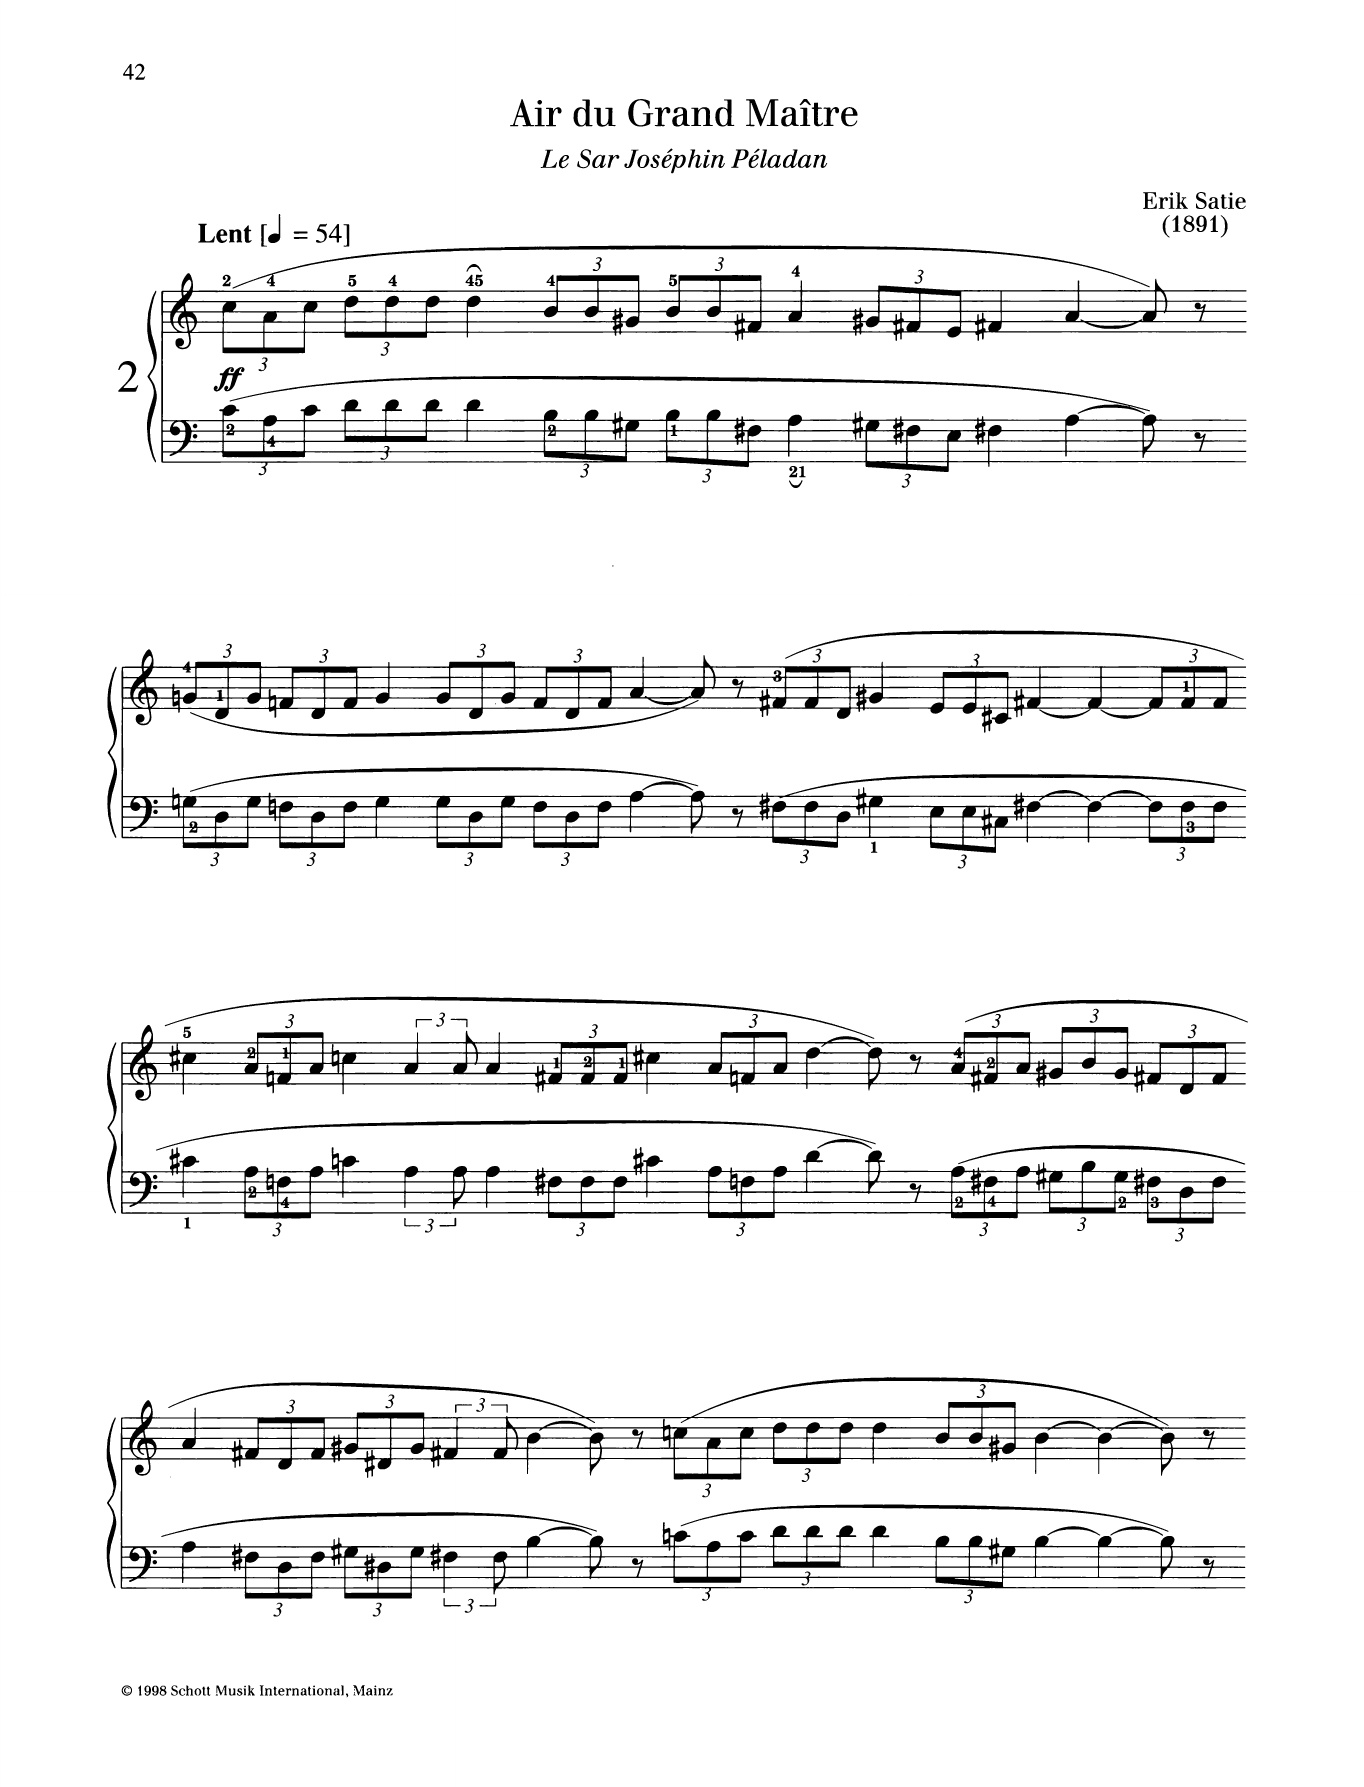 Erik Satie Air du Grand Maitre Sheet Music Notes & Chords for Piano Solo - Download or Print PDF